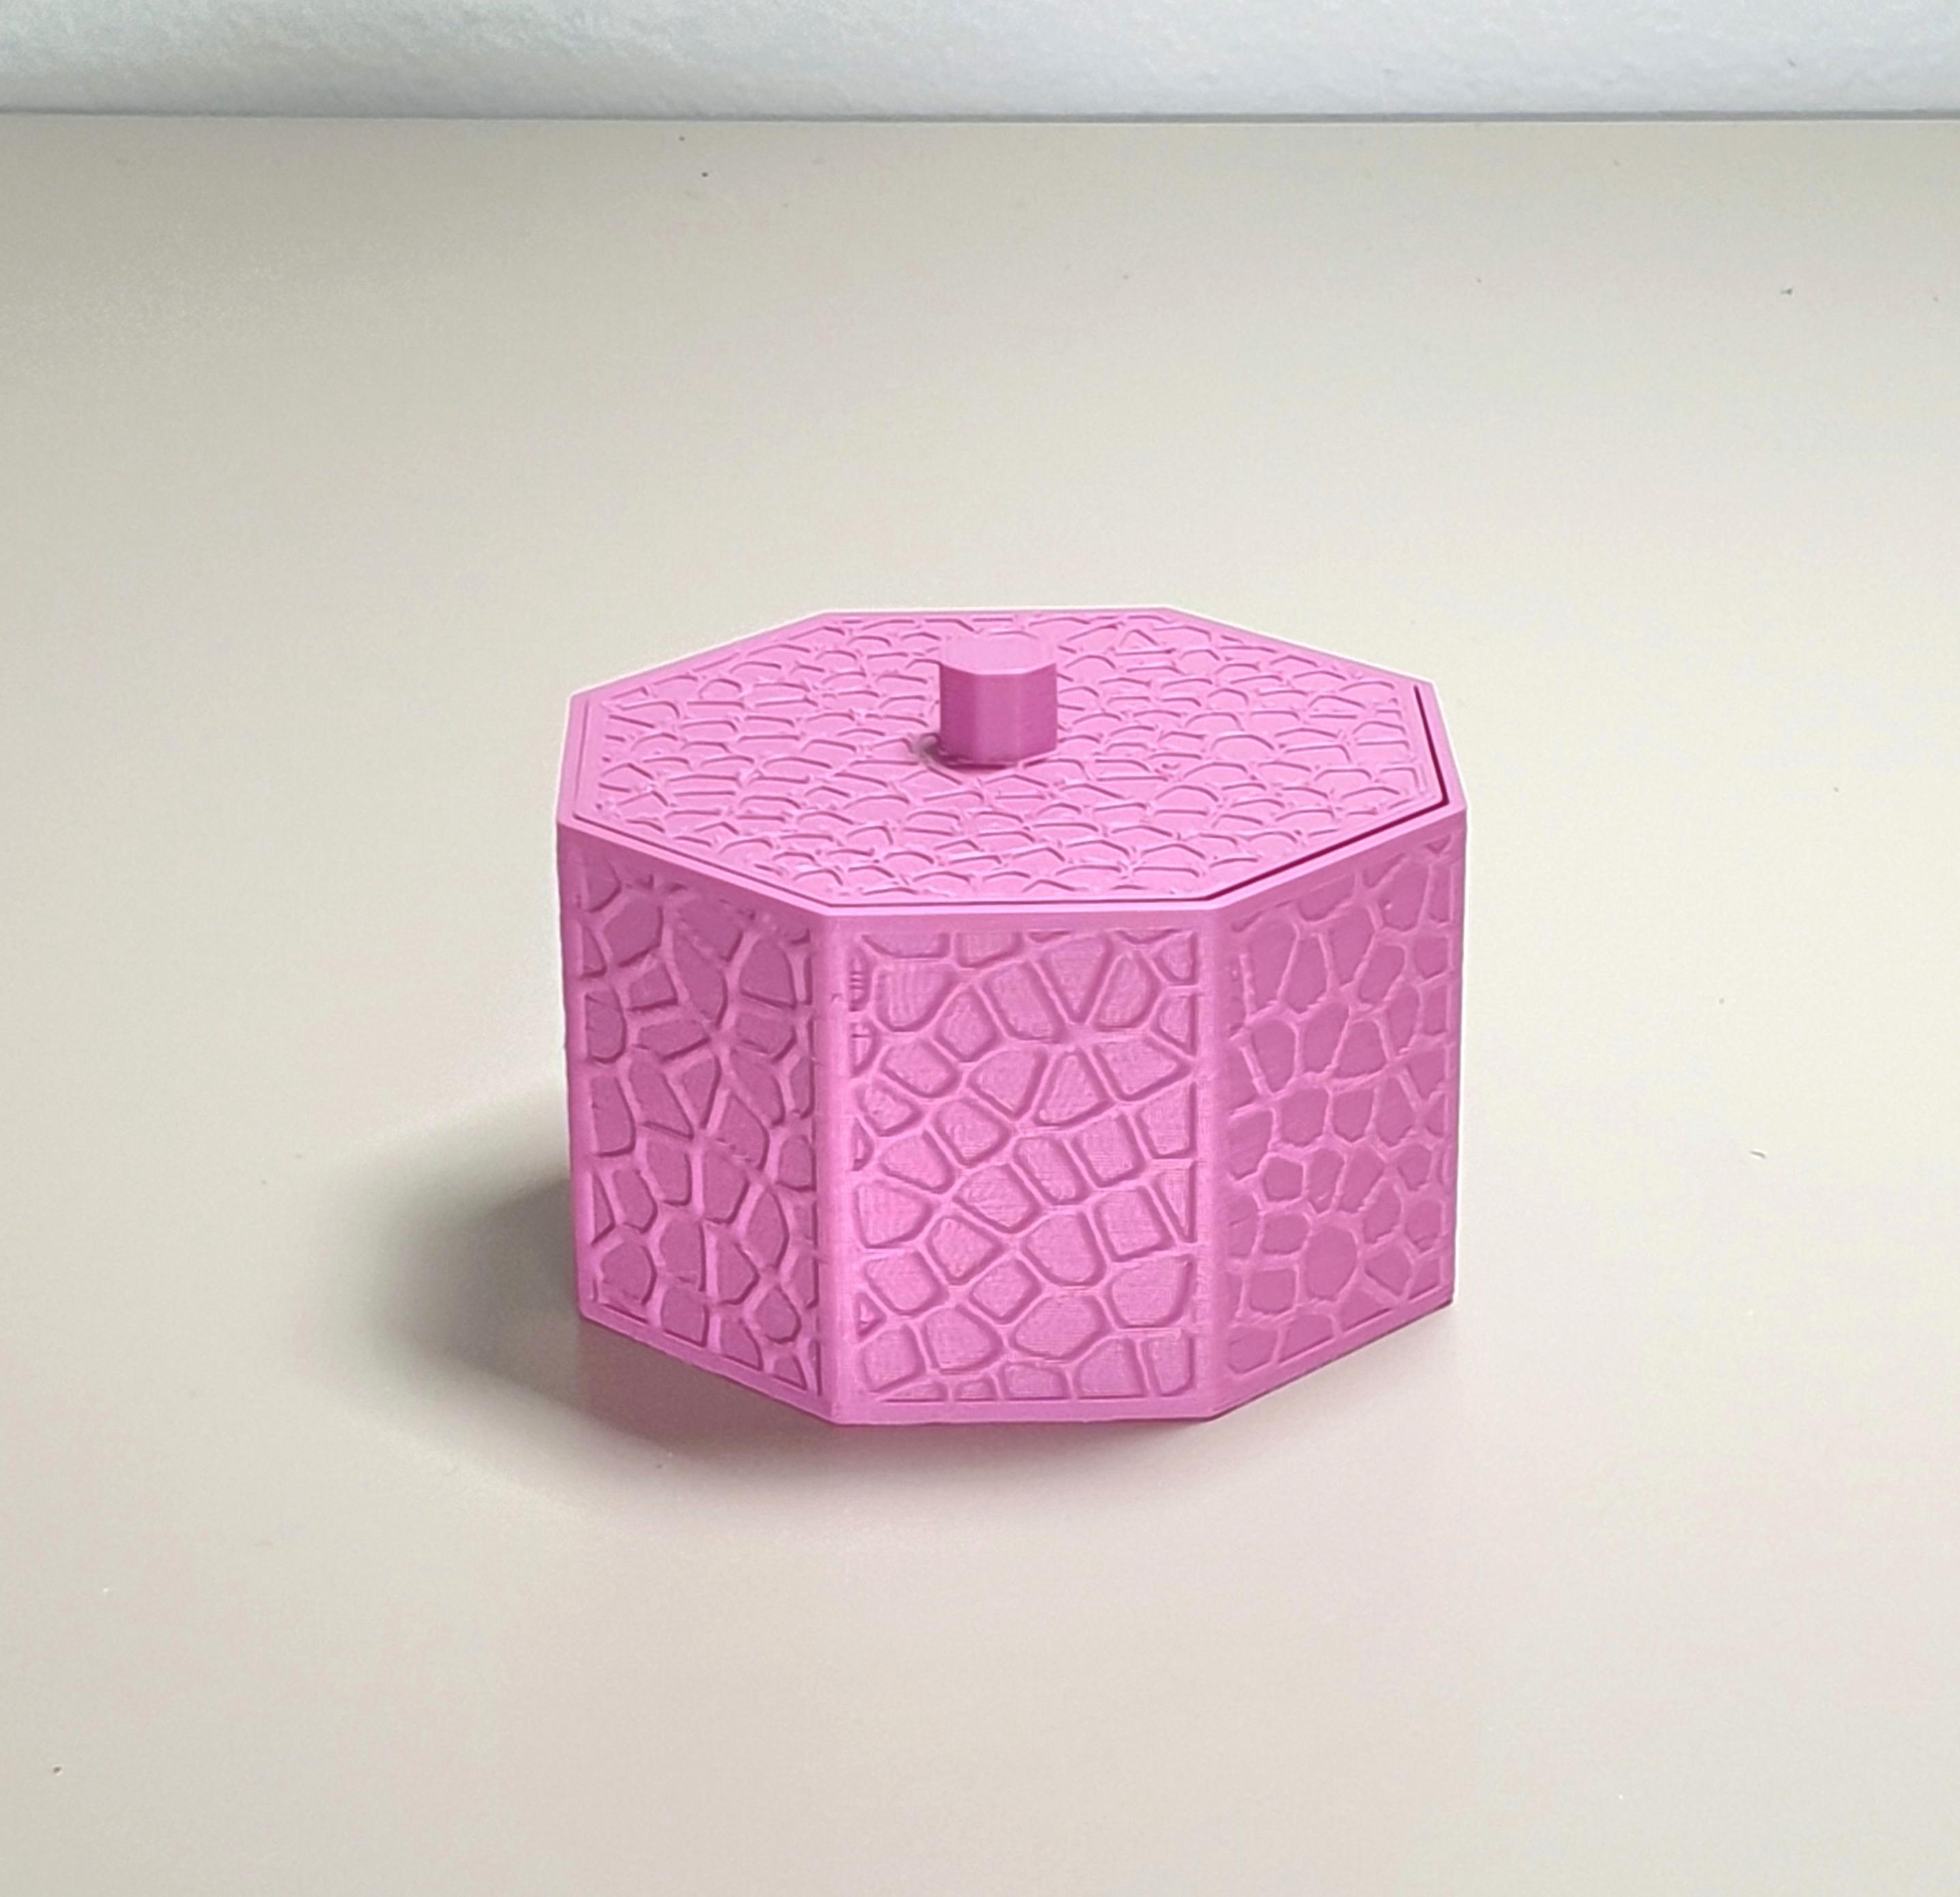 Voronoi Octobox with lid 3d model